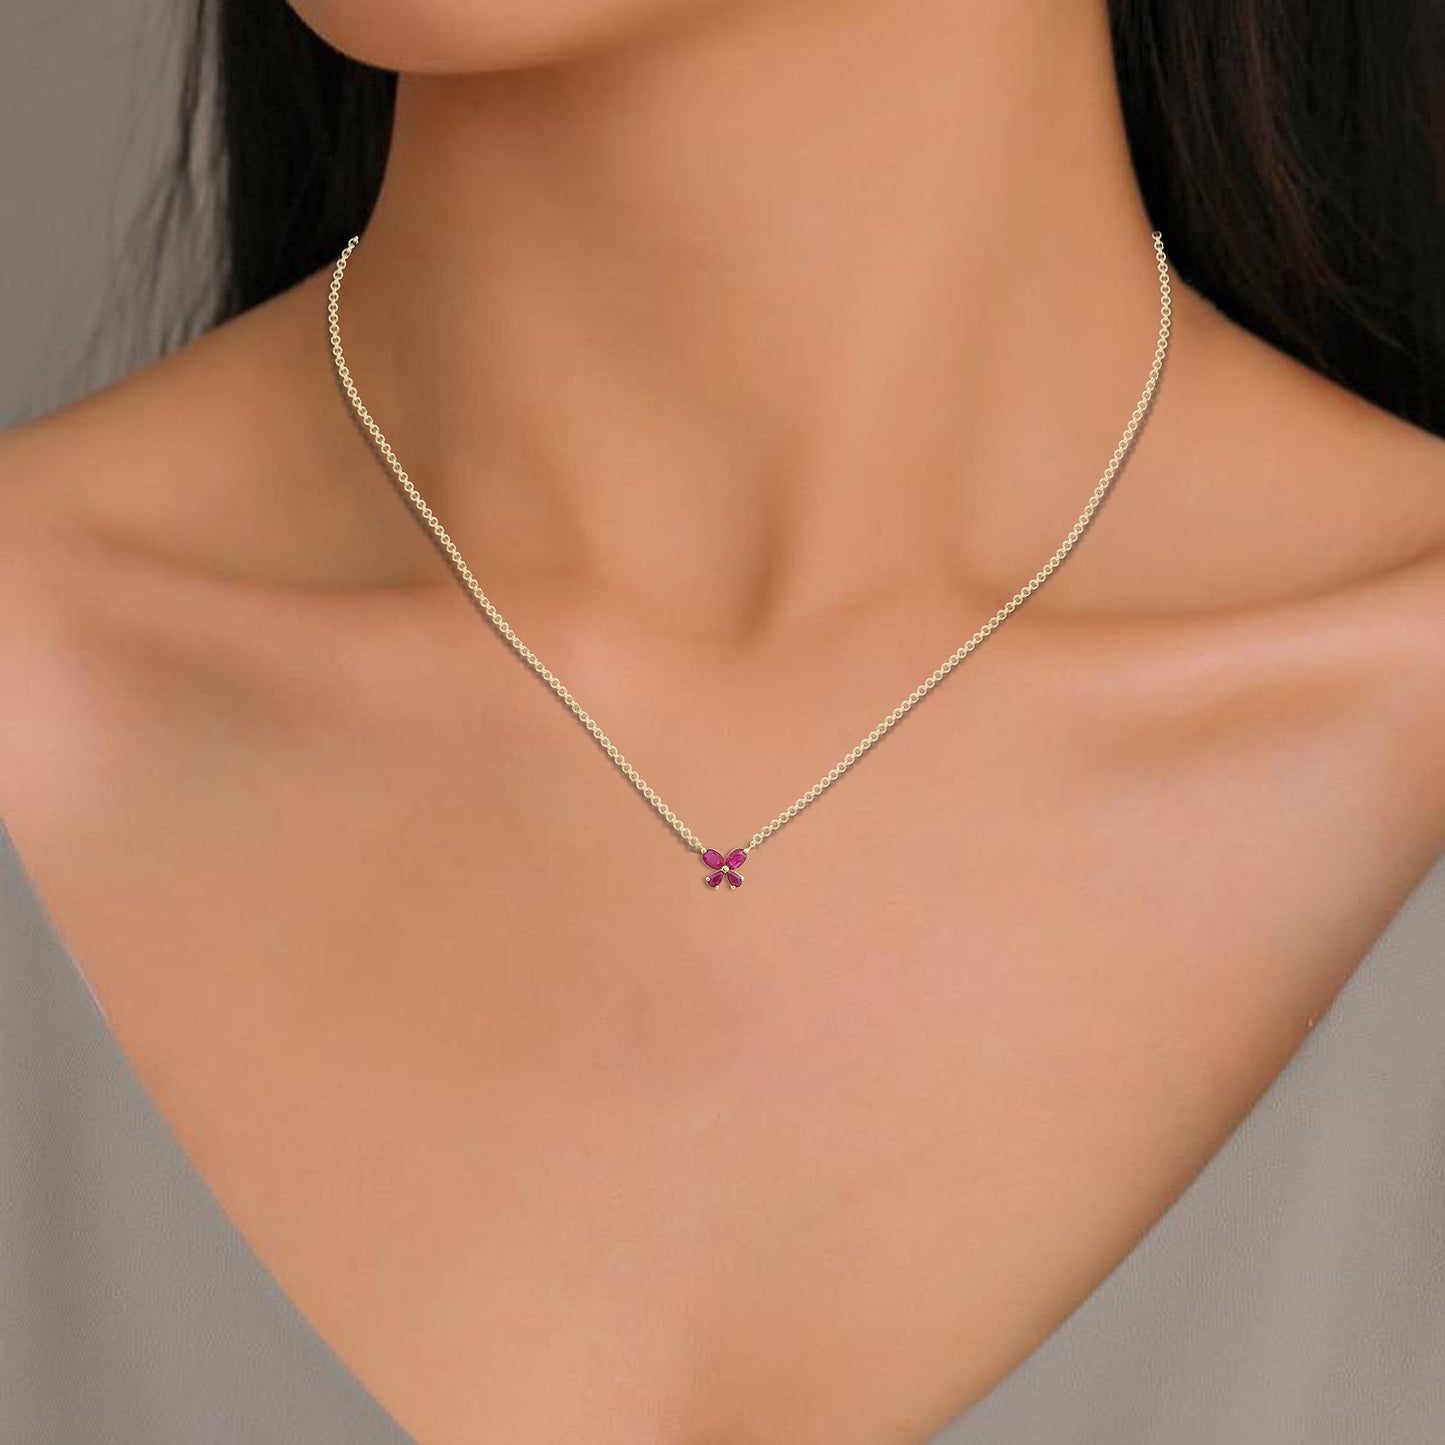 Pink Butterfly Necklace | The National Fibromyalgia Association